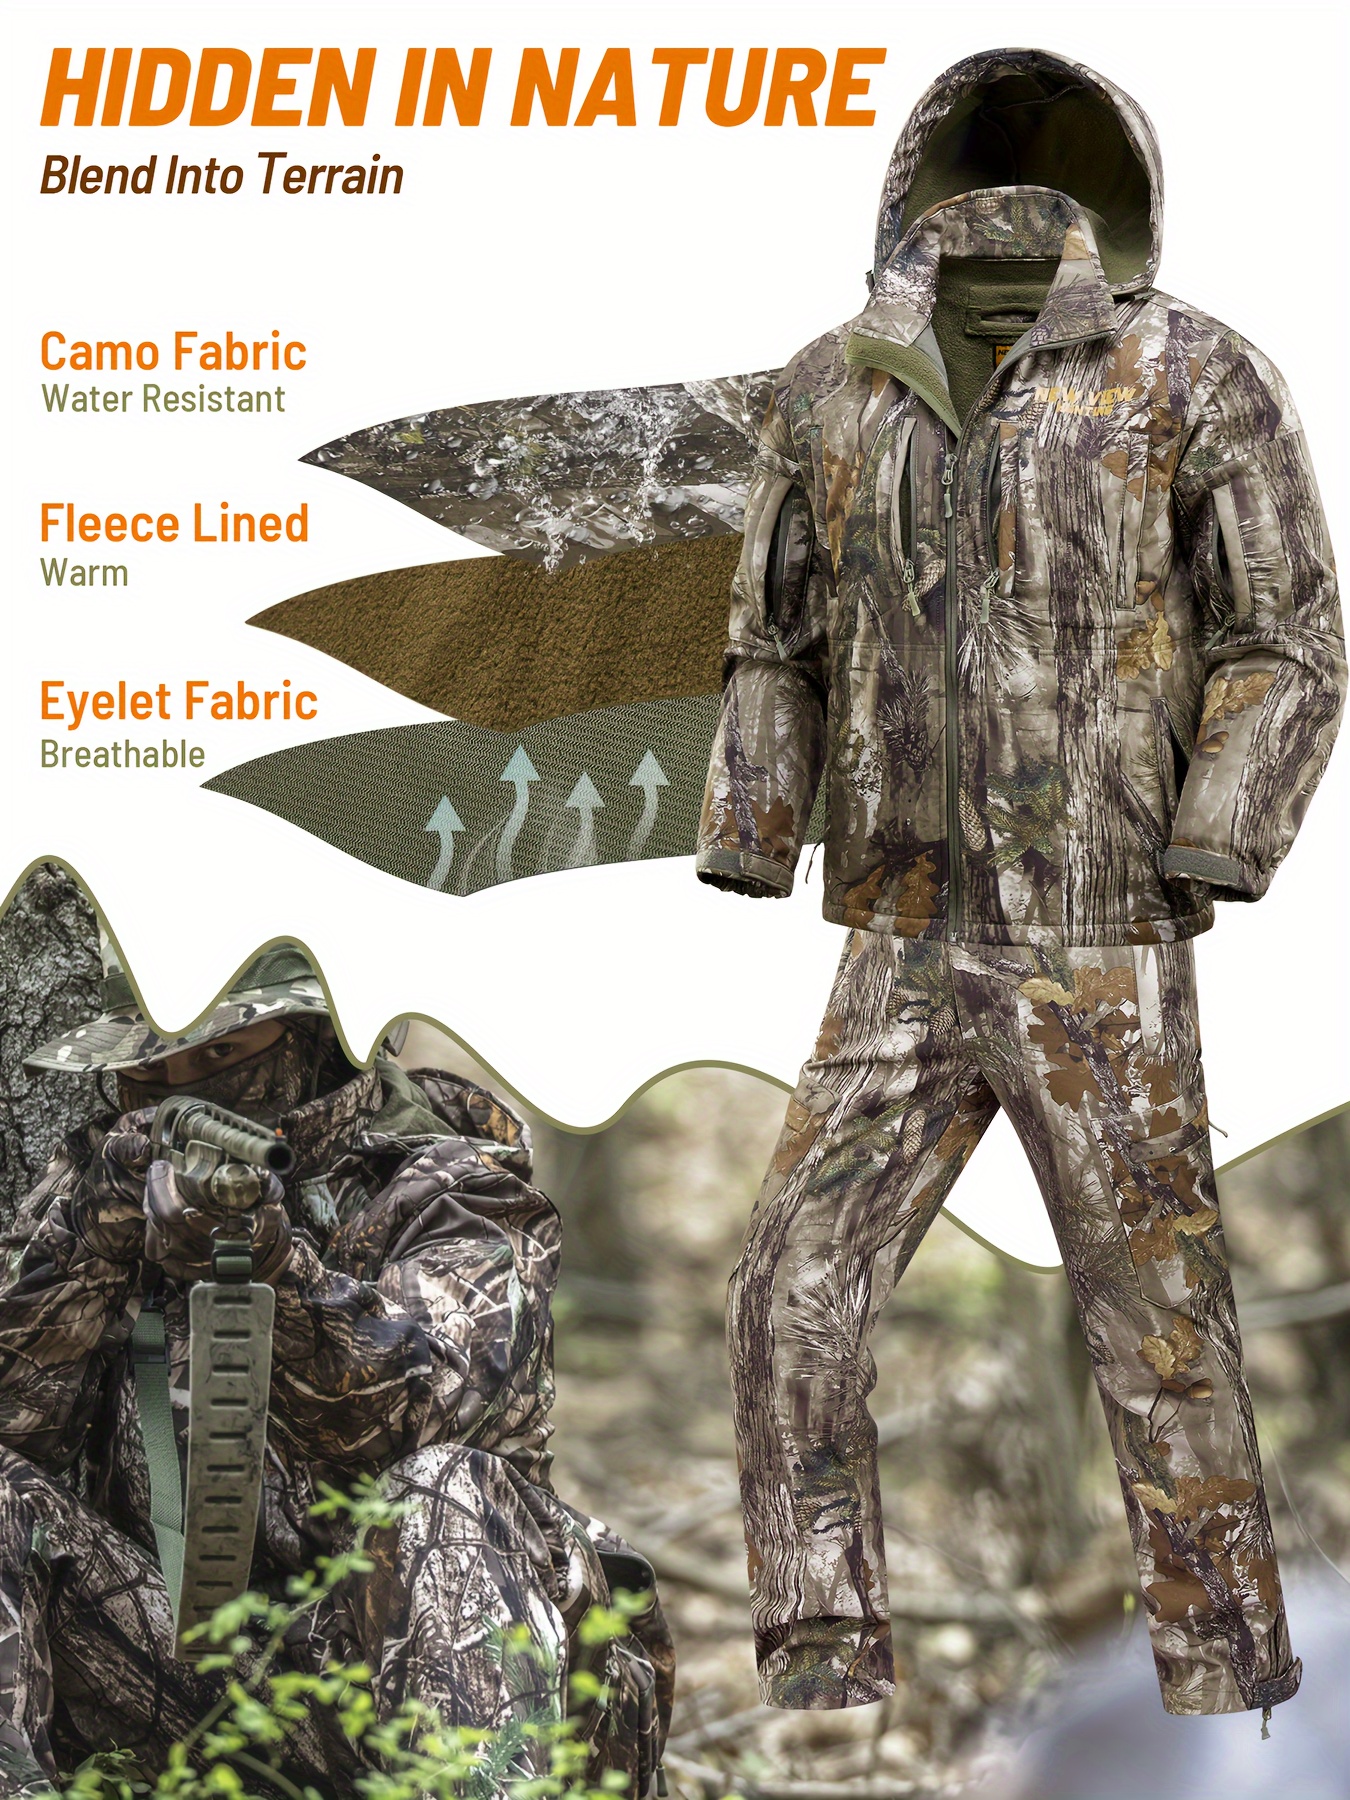 Ropa de caza de camuflaje para hombre, chaqueta y pantalón impermeable a  prueba de viento, chaqueta cálida de forro polar con capucha